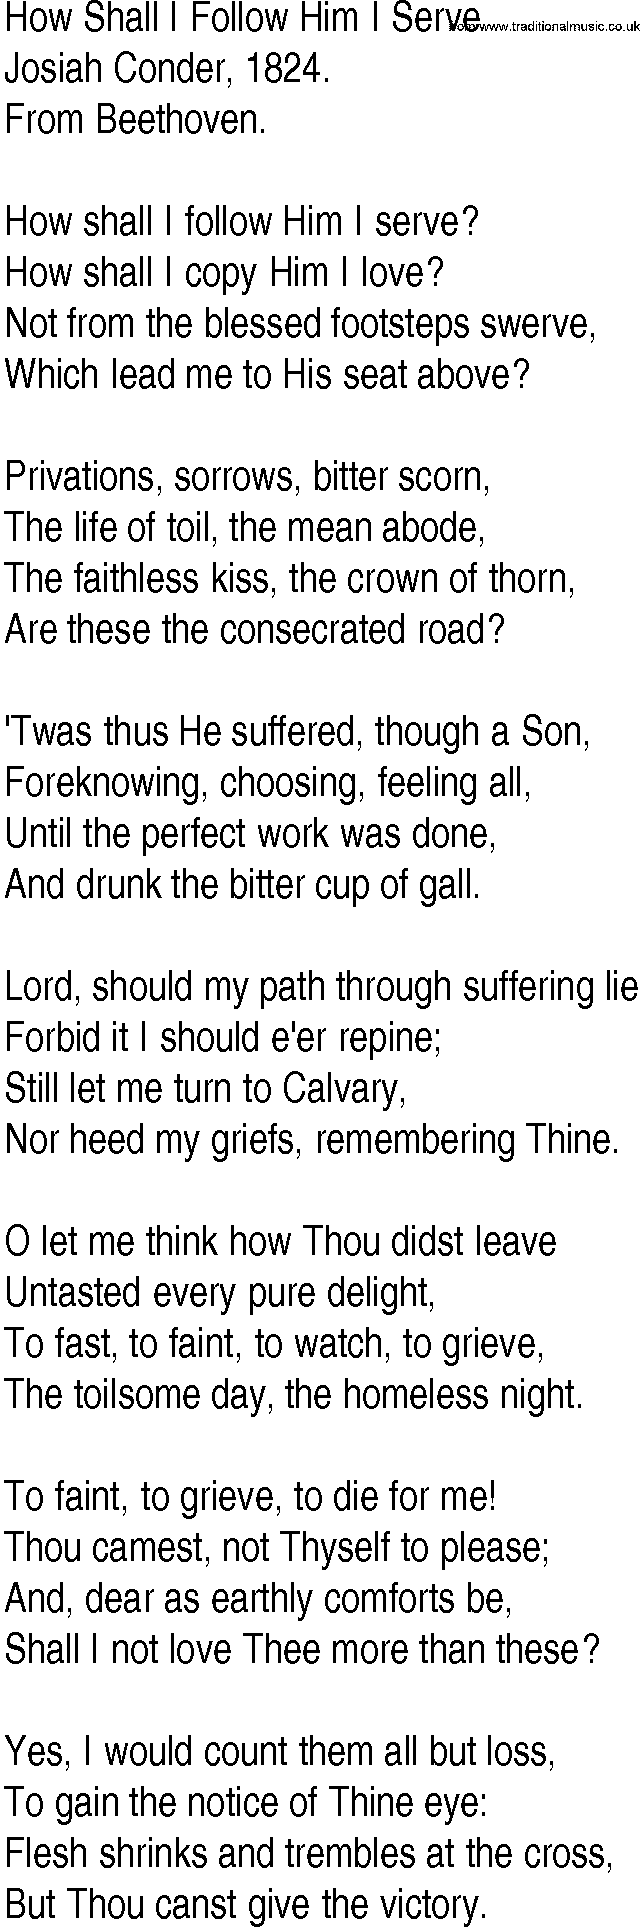 Hymn and Gospel Song: How Shall I Follow Him I Serve by Josiah Conder lyrics